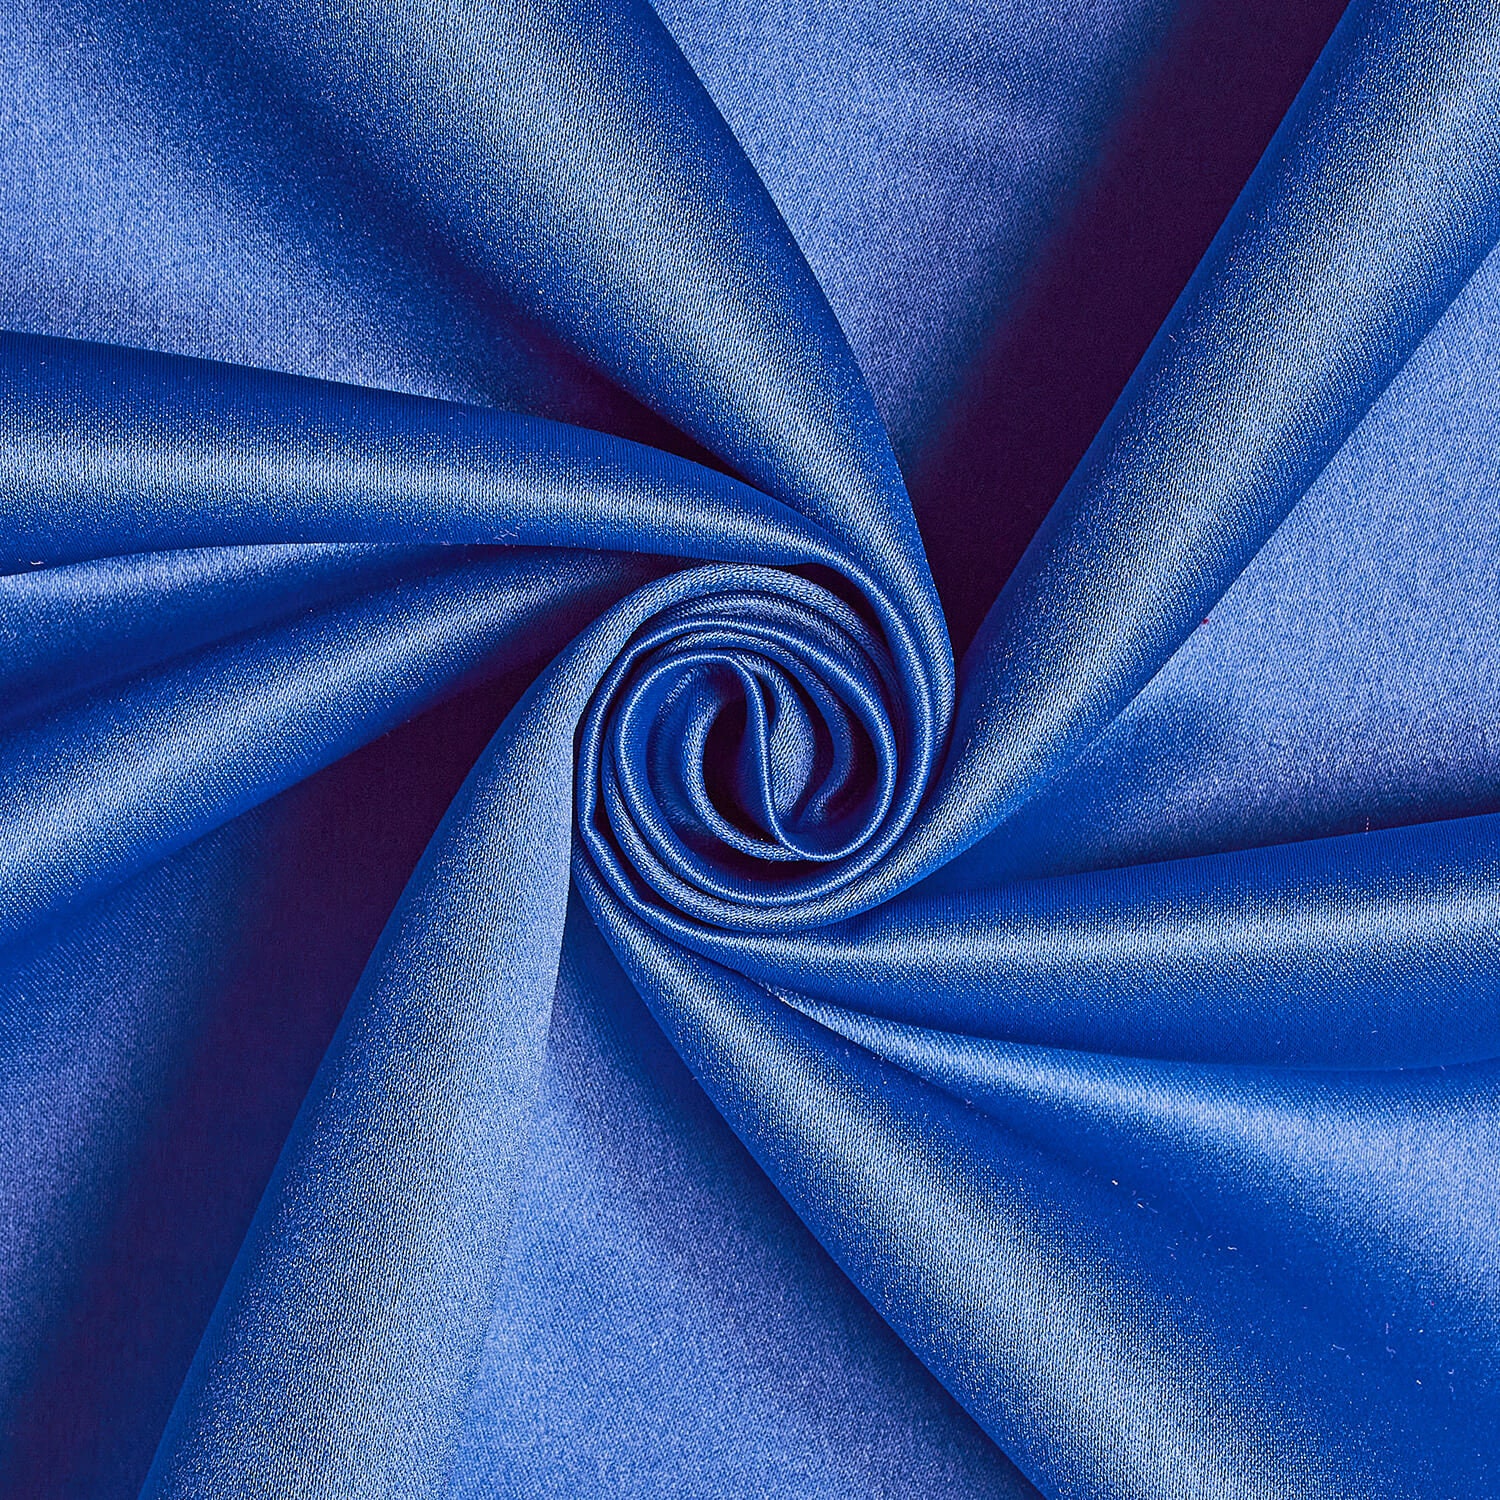 NY Designer Fabrics Royal Blue Silk Duchess Satin Fabric